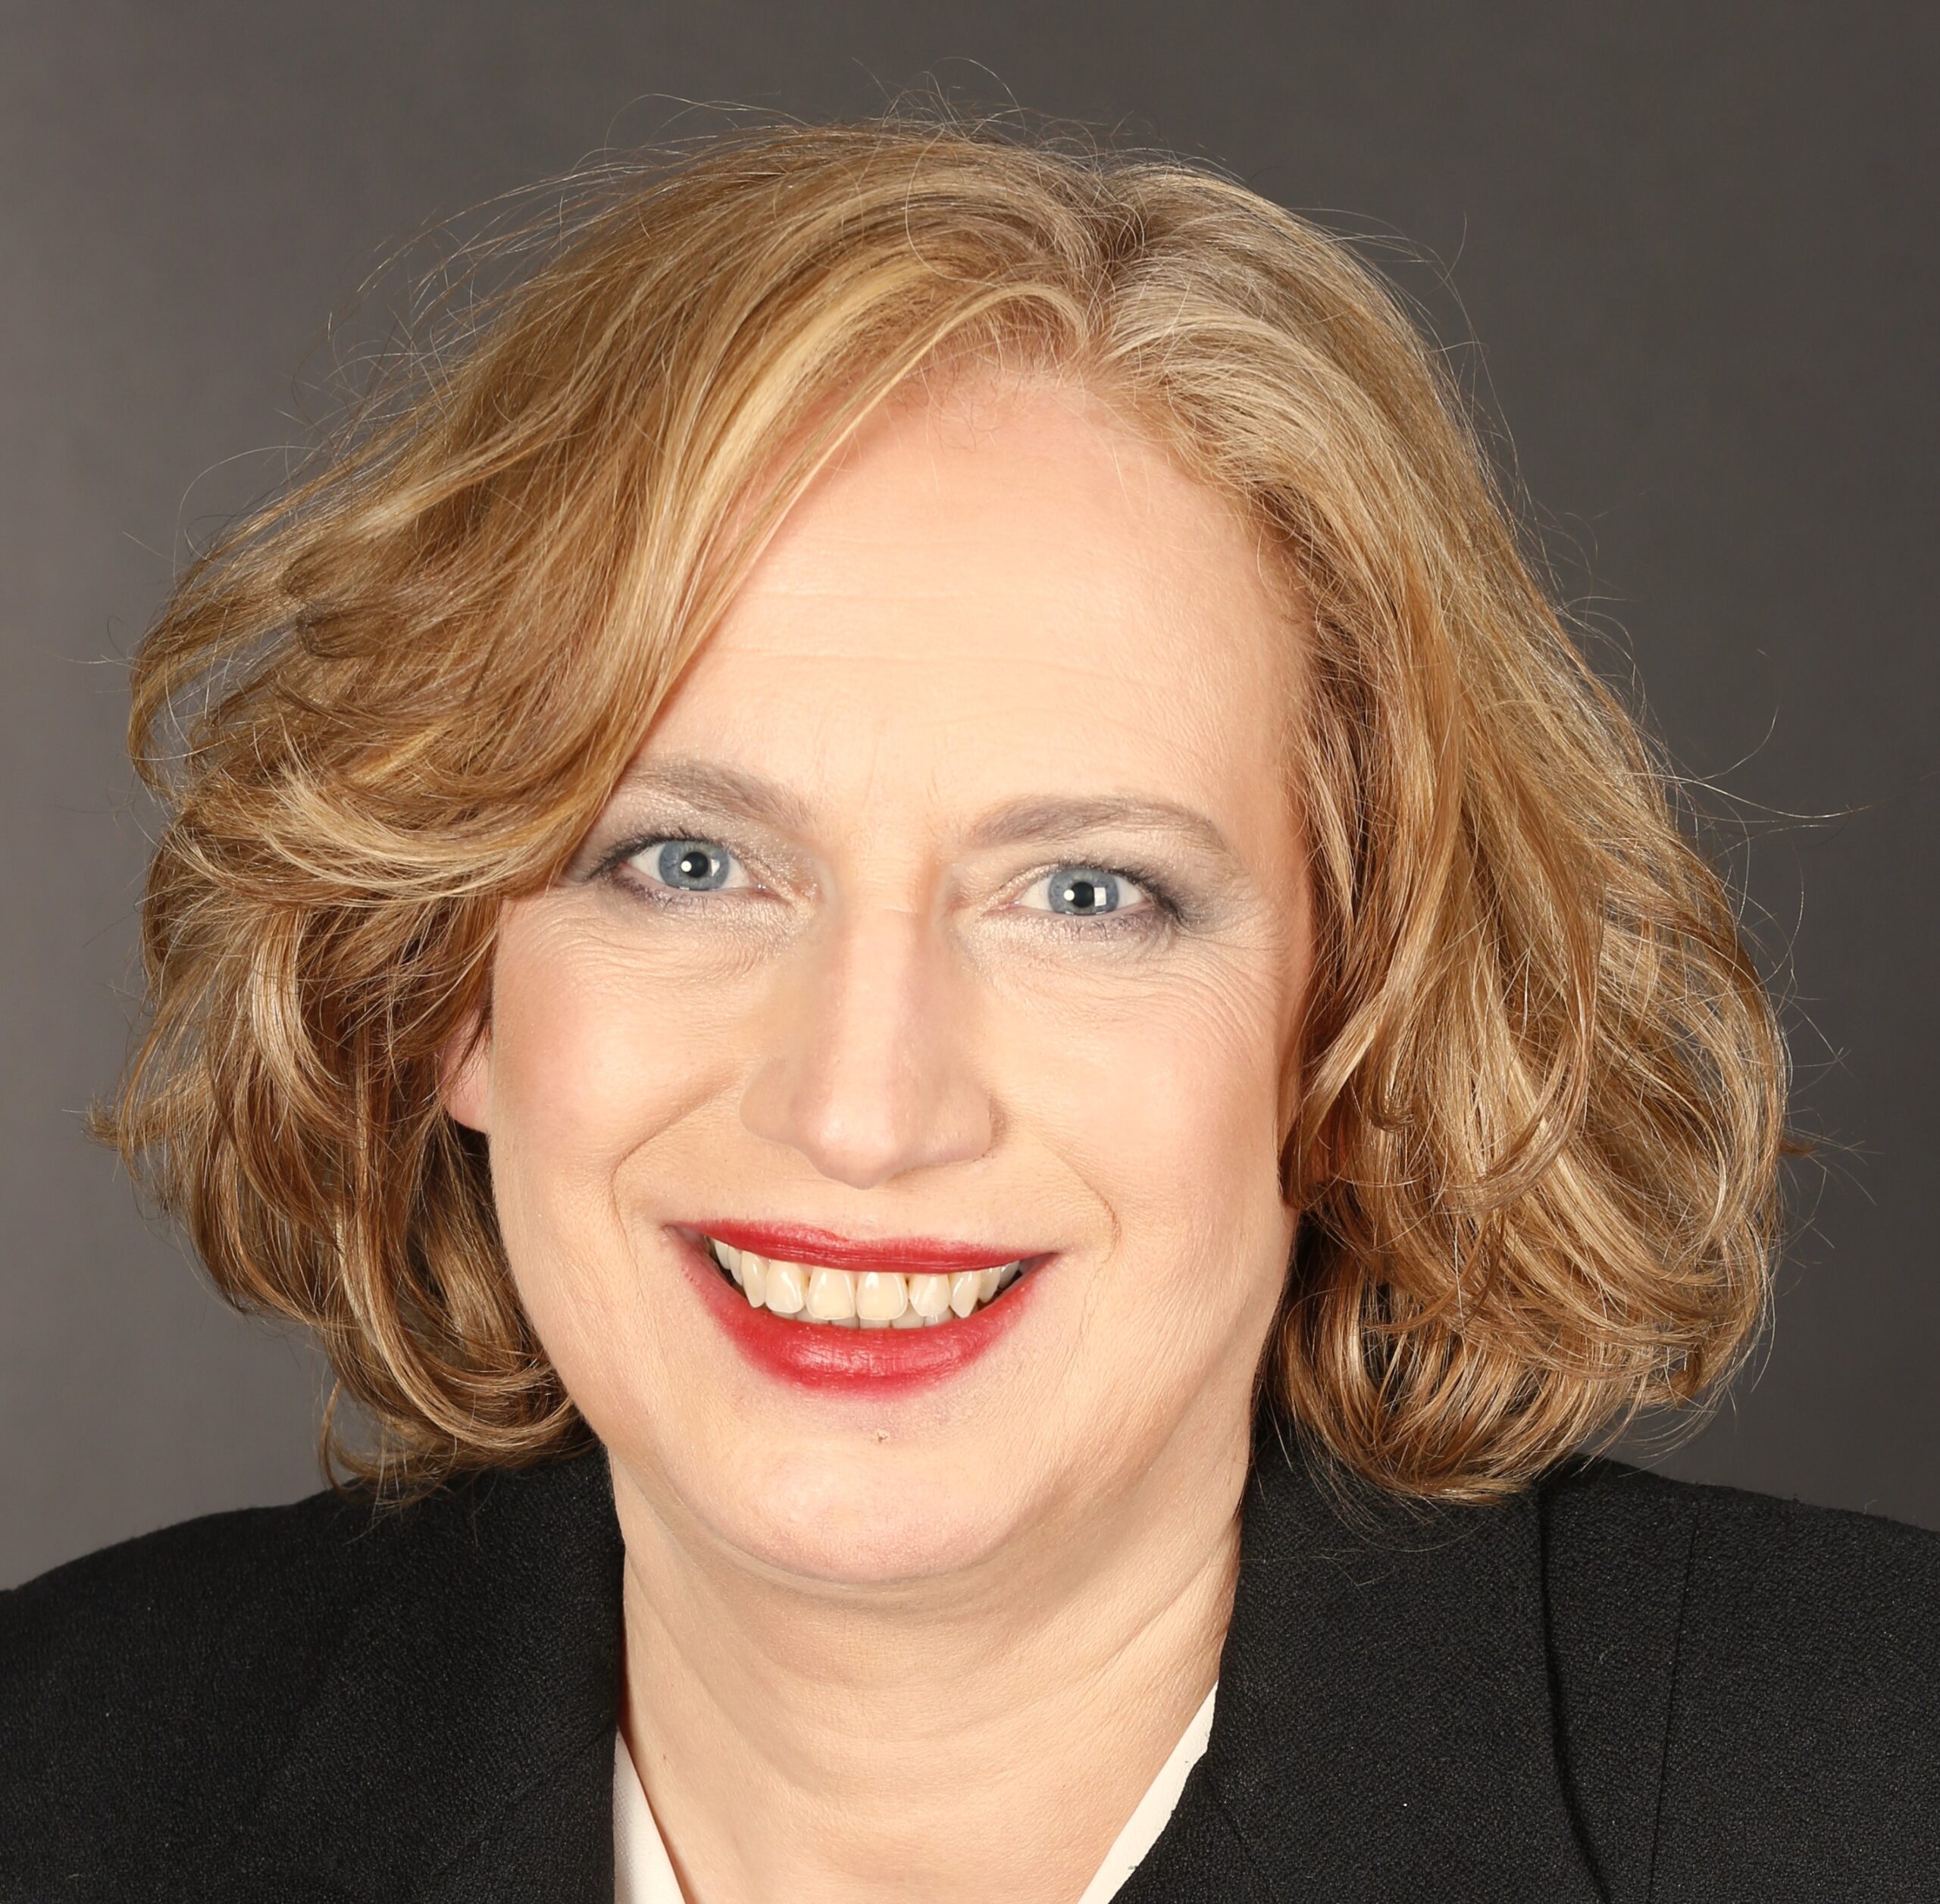 Dr. Anja Schliwka